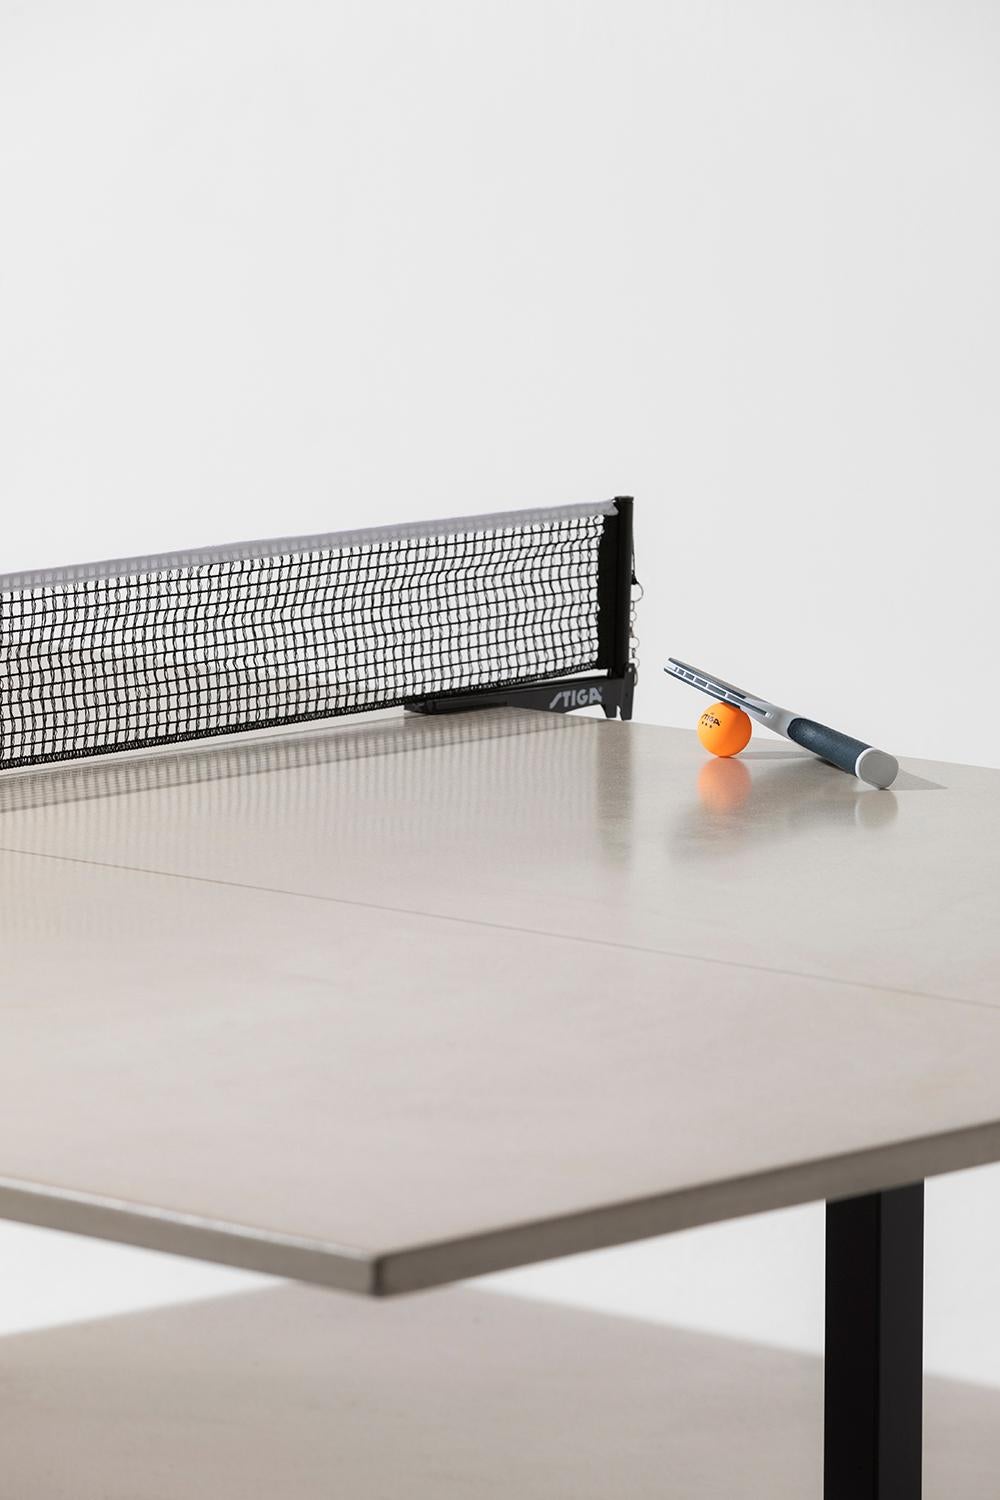 James de Wulf Vue Concrete Ping Pong-Tisch aus Beton, Edelstahlsockel – Standard (Moderne) im Angebot